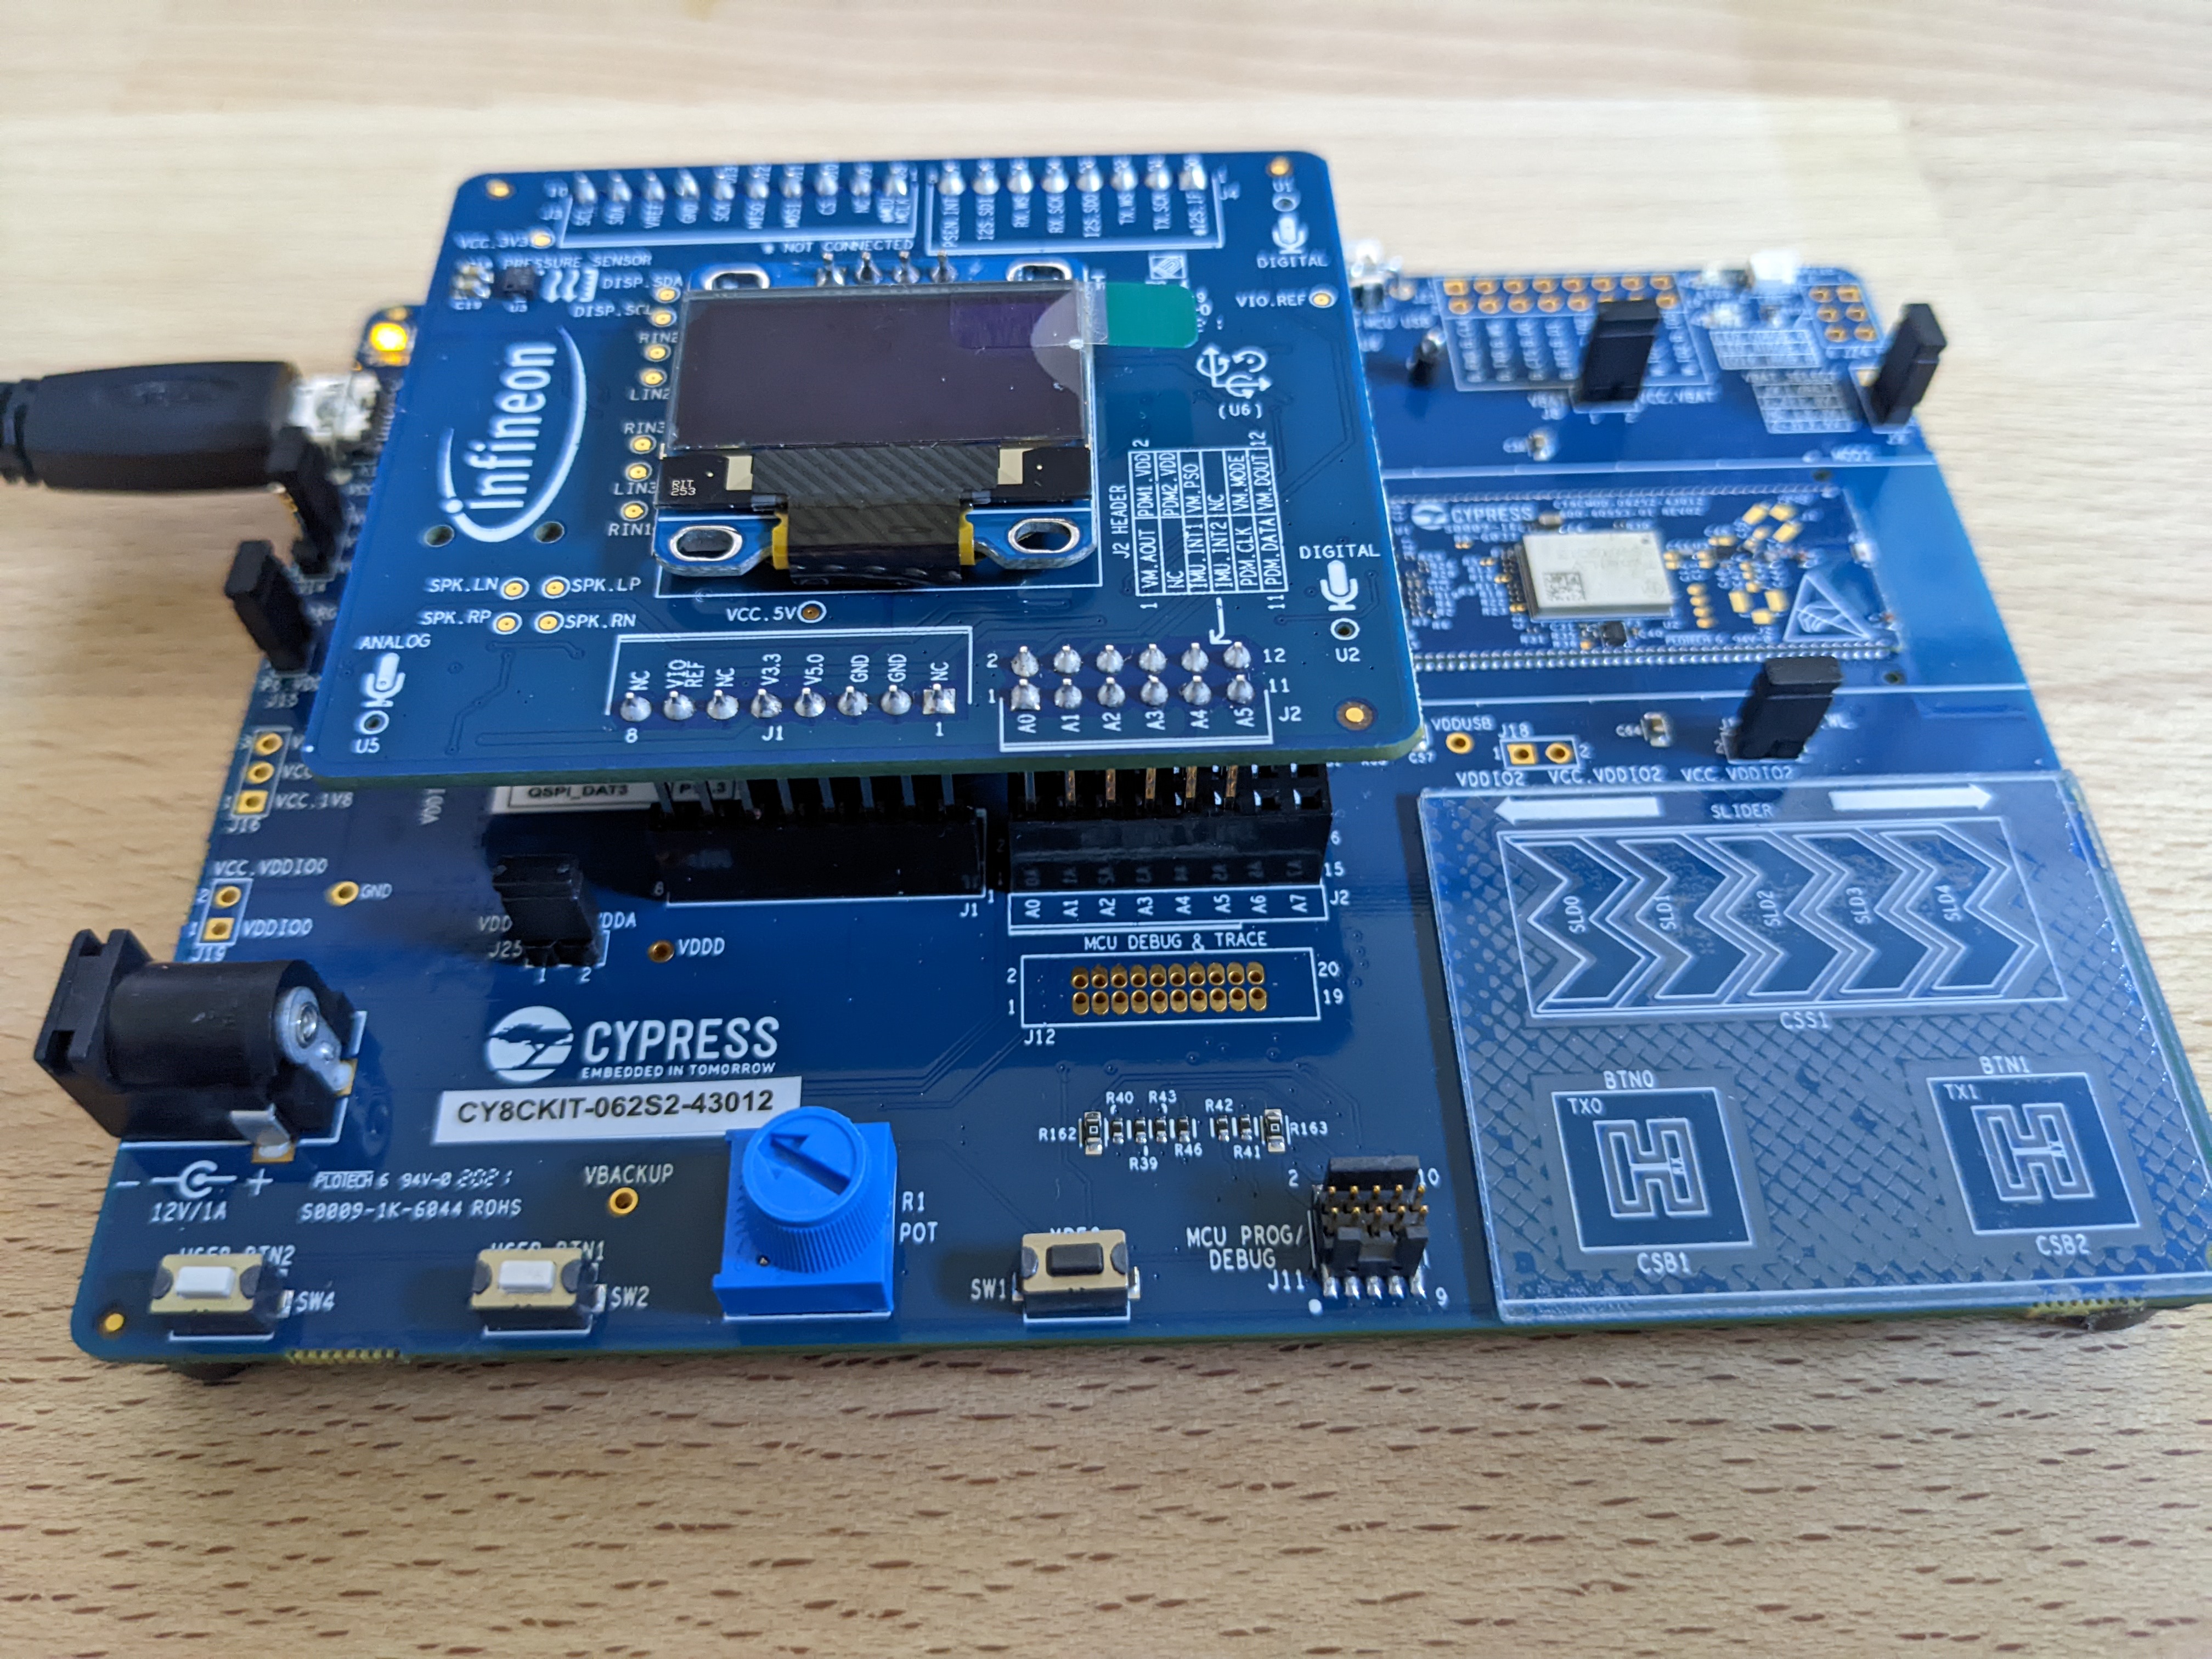 PSoC 62S2 Wi-Fi BT Pioneer Kit (CY8CKIT-062S2-43012) and IoT sense expansion kit (CY8CKIT-028-SENSE)